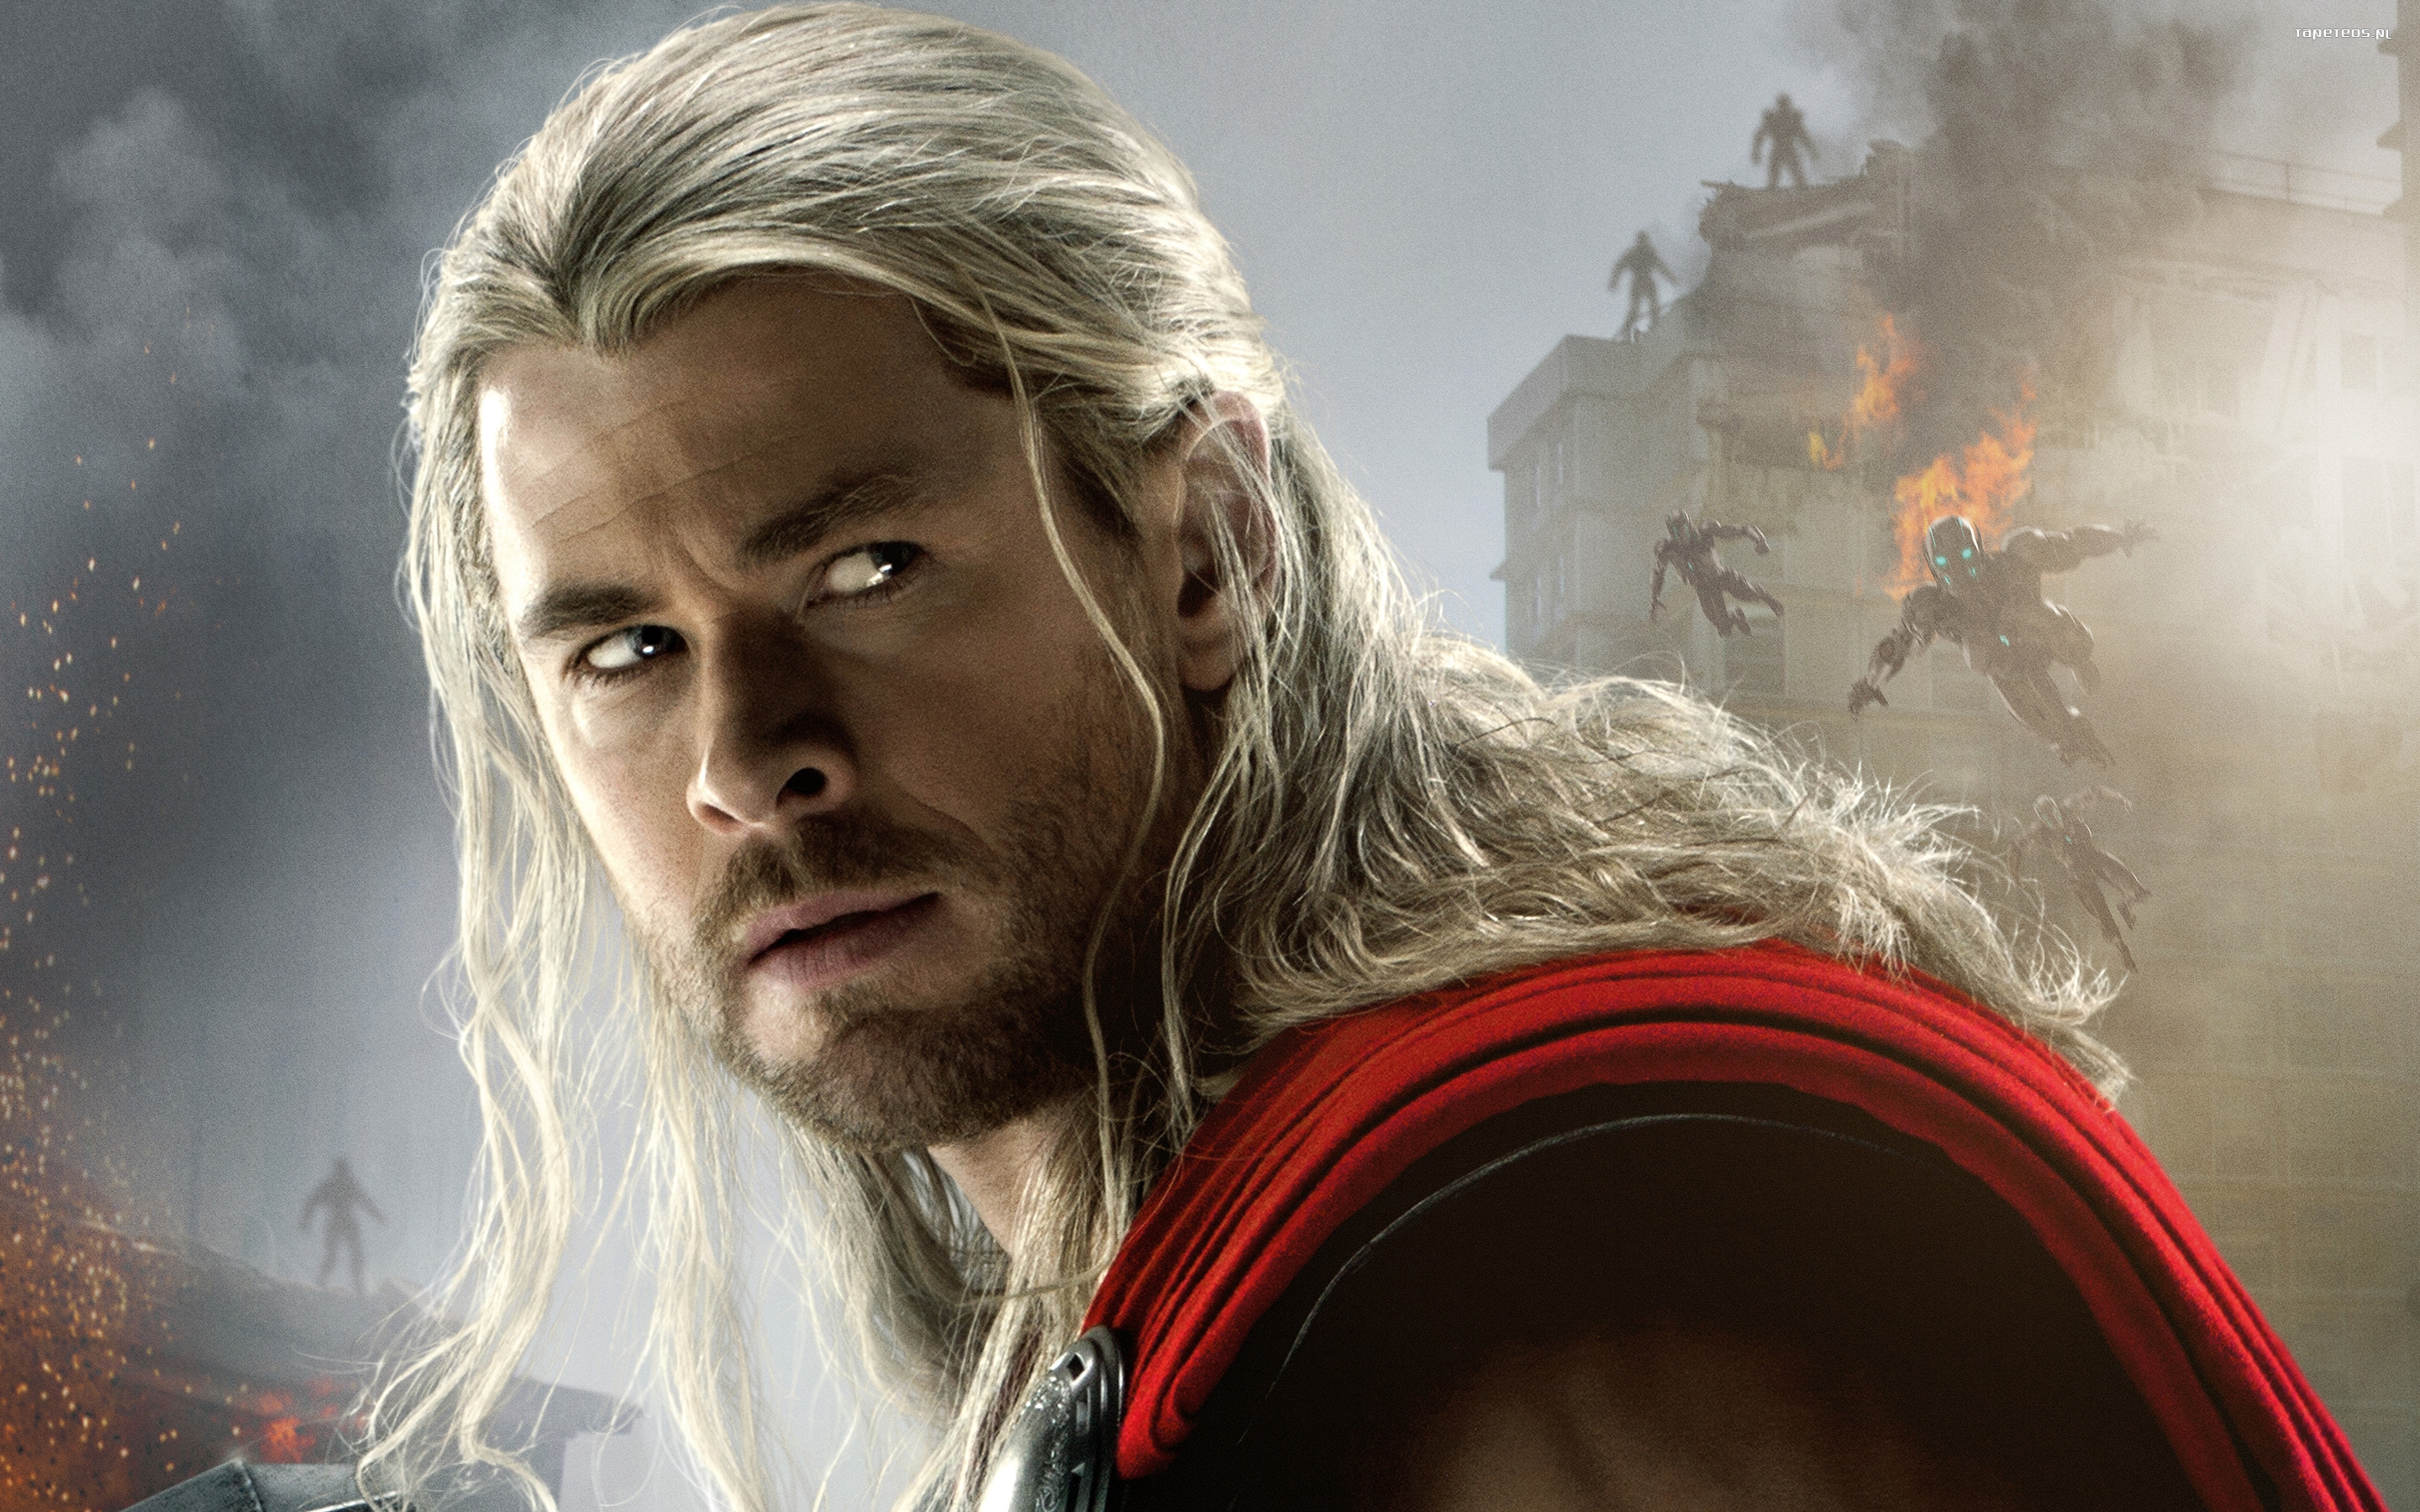 Avengers Age of Ultron 024 Thor, Chris Hemsworth